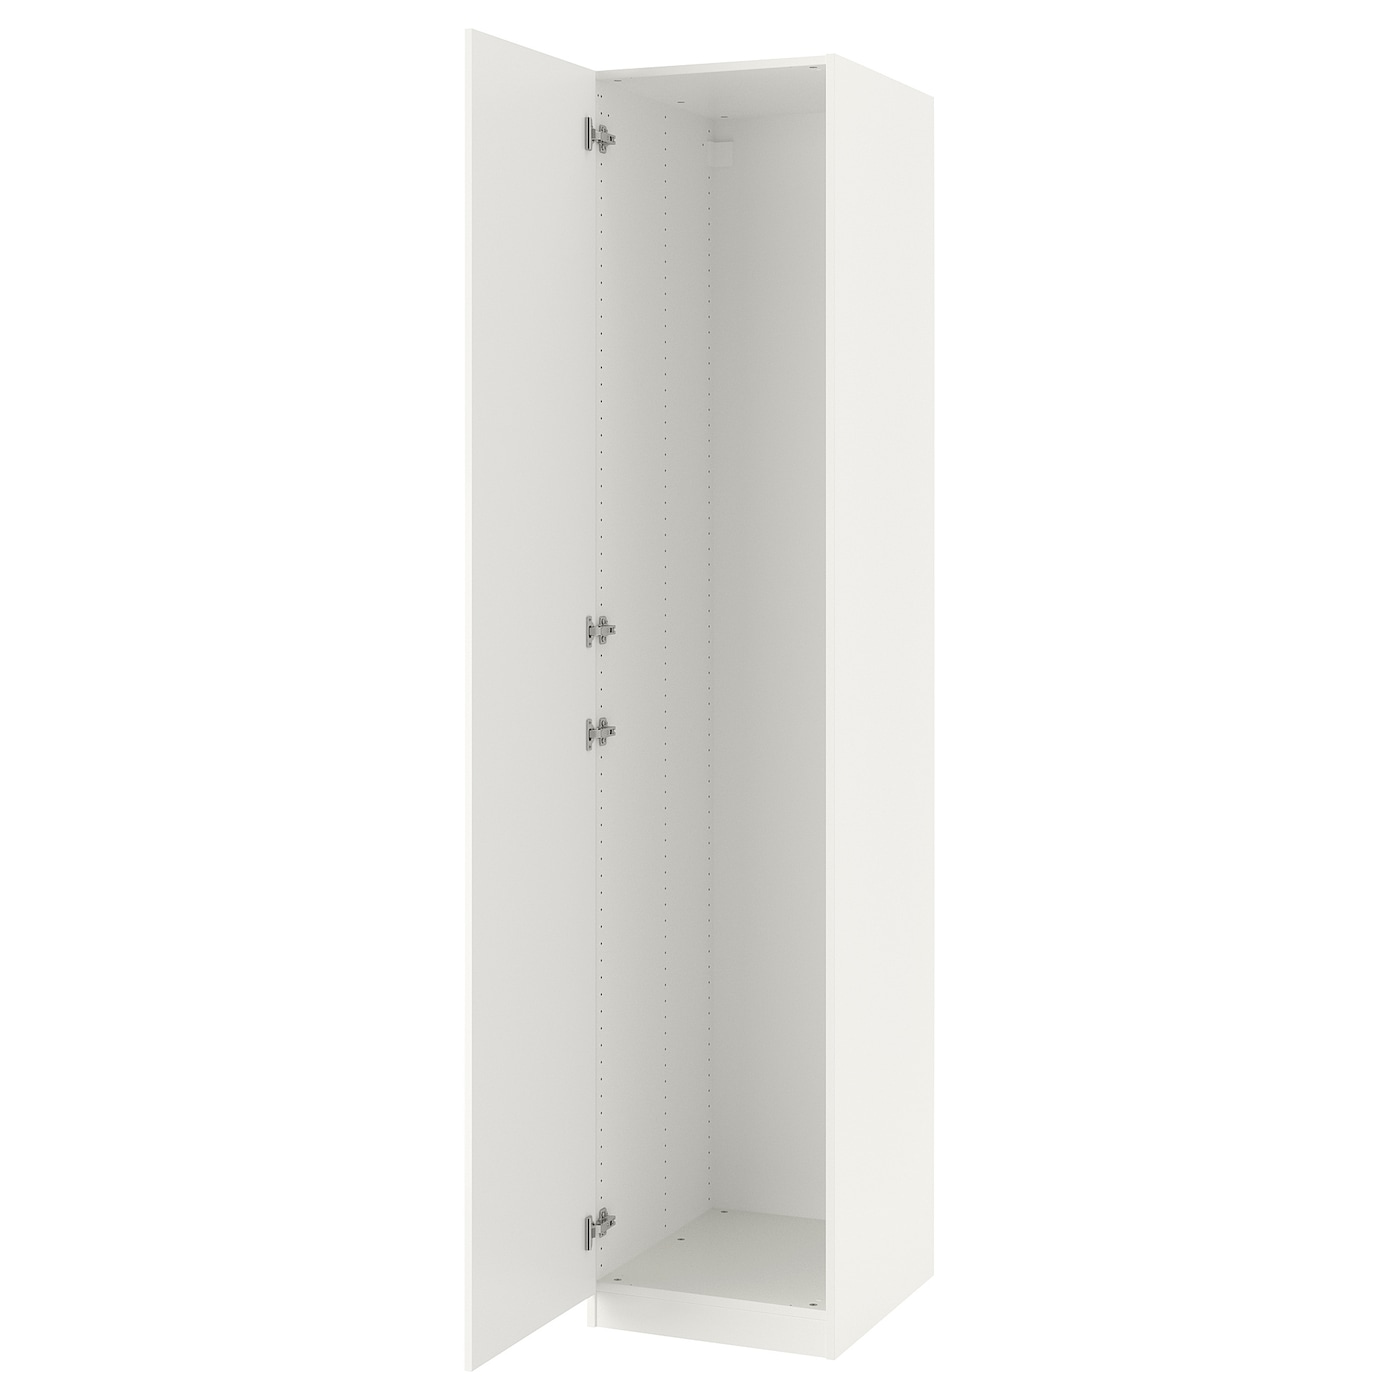 Платяной шкаф - IKEA PAX/FARDAL, 50x60x236 см, белый ПАКС/ФАРДАЛЬ ИКЕА